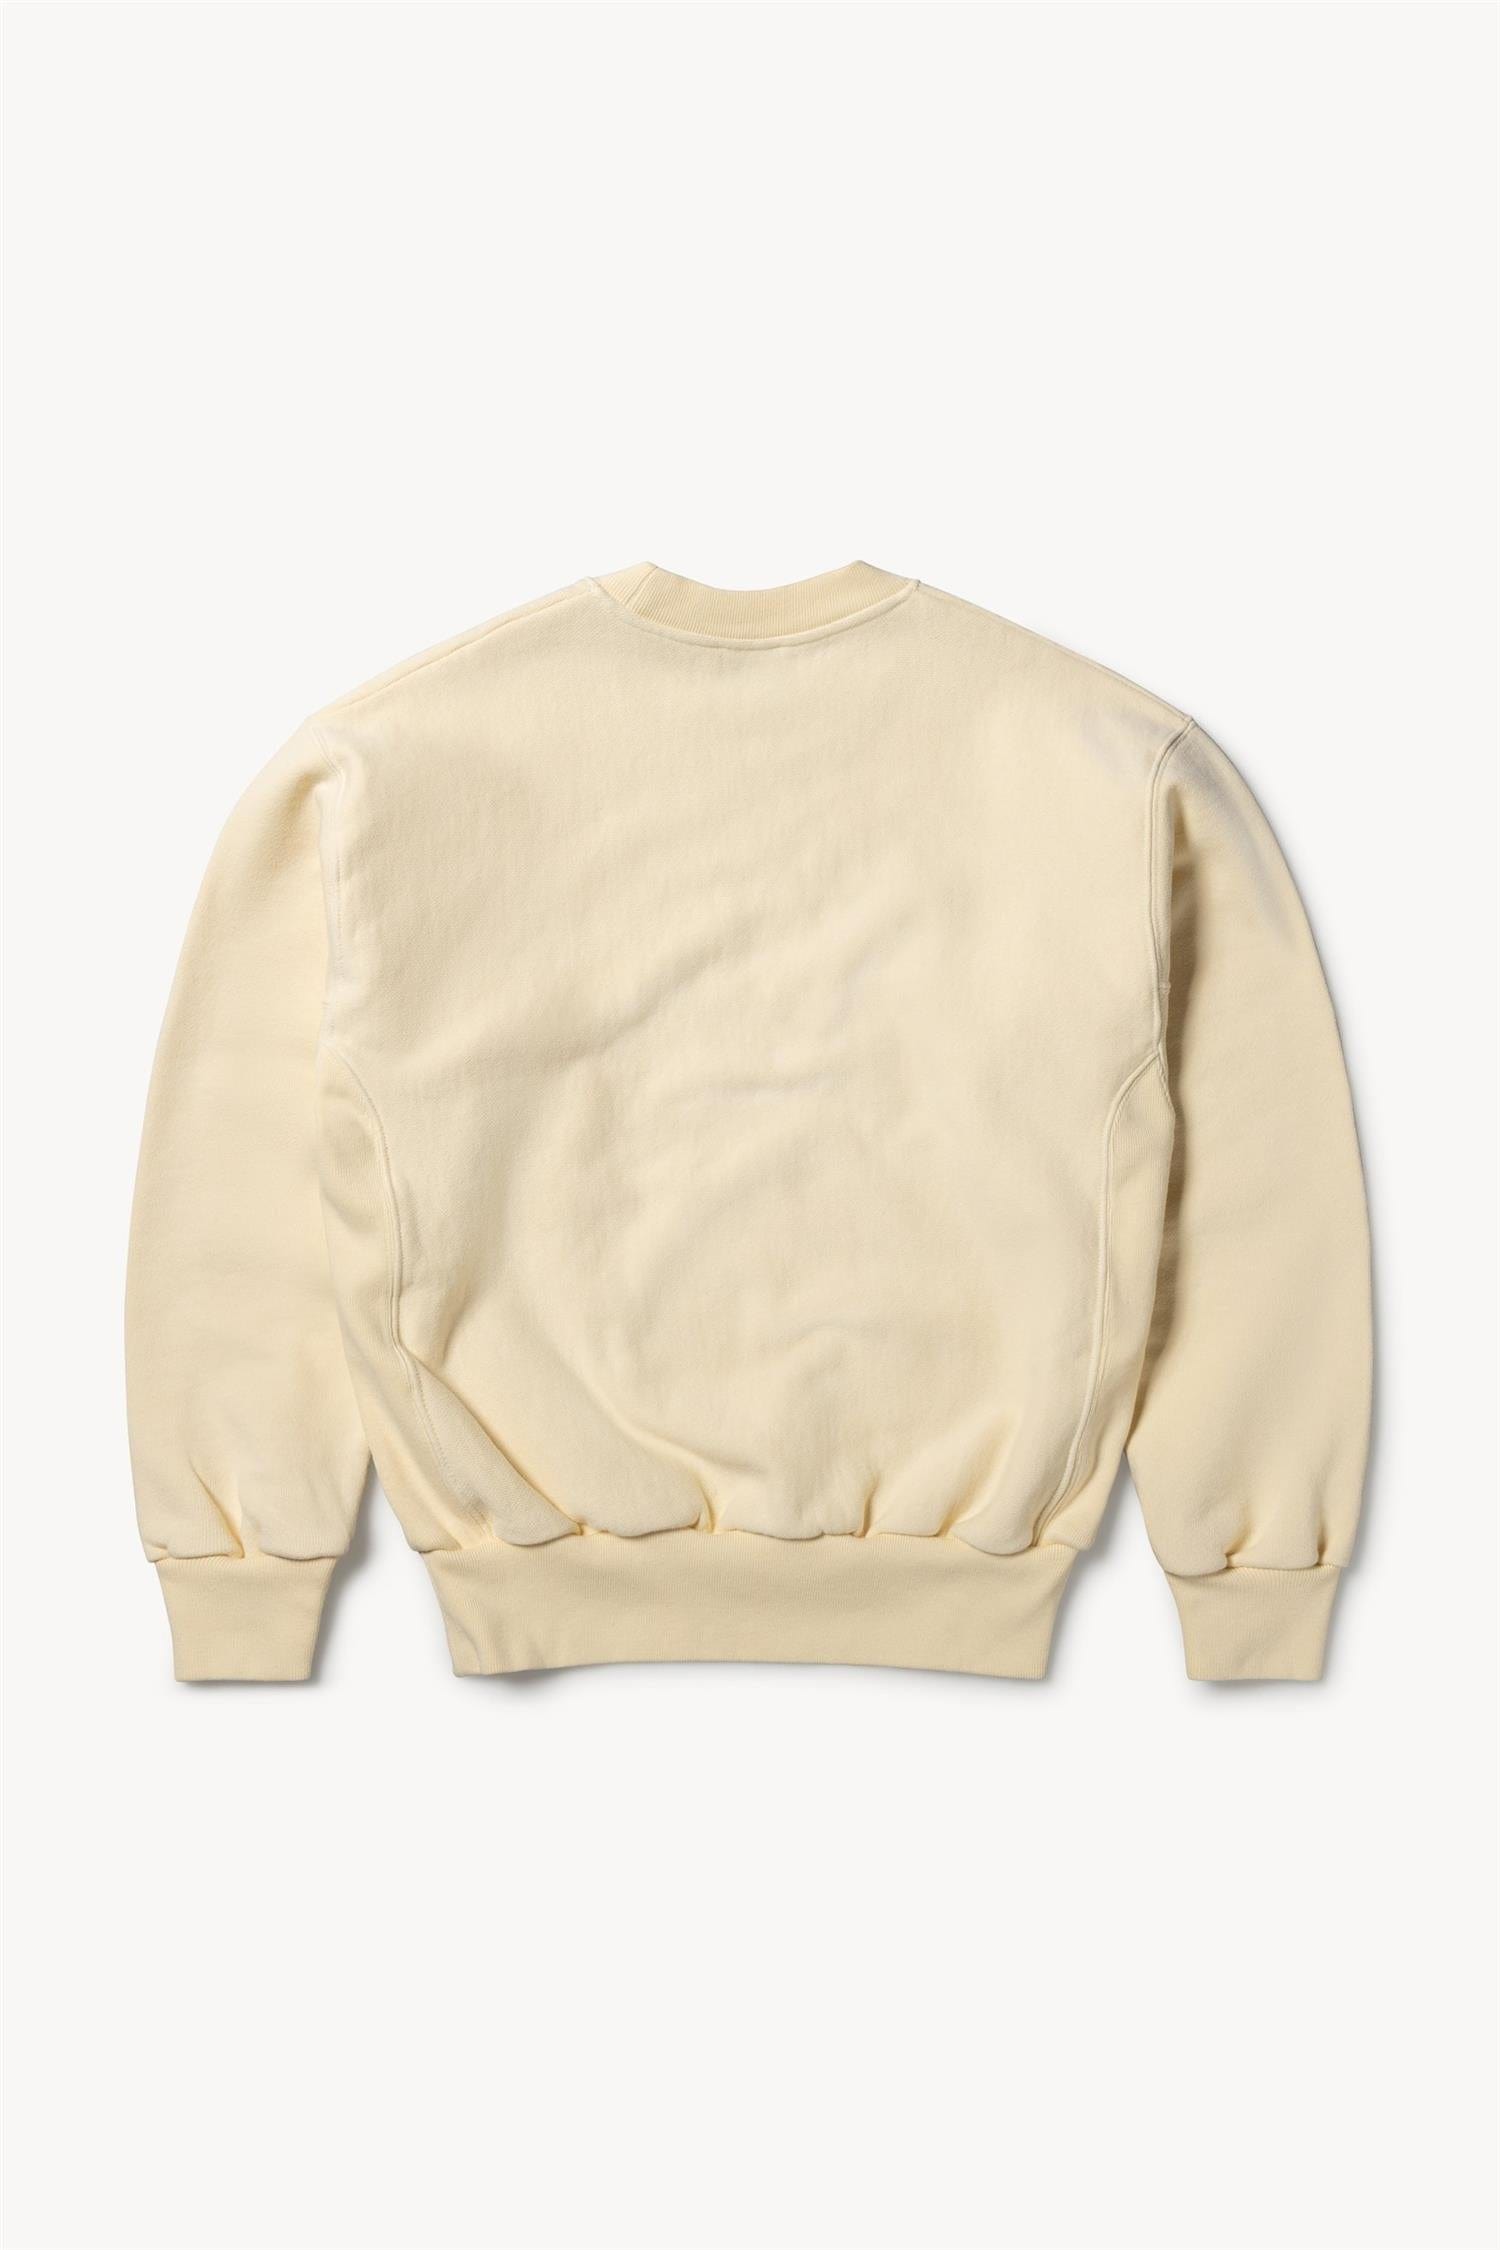 Aries Sweaters Genser | Premium Temple Sweatshirt